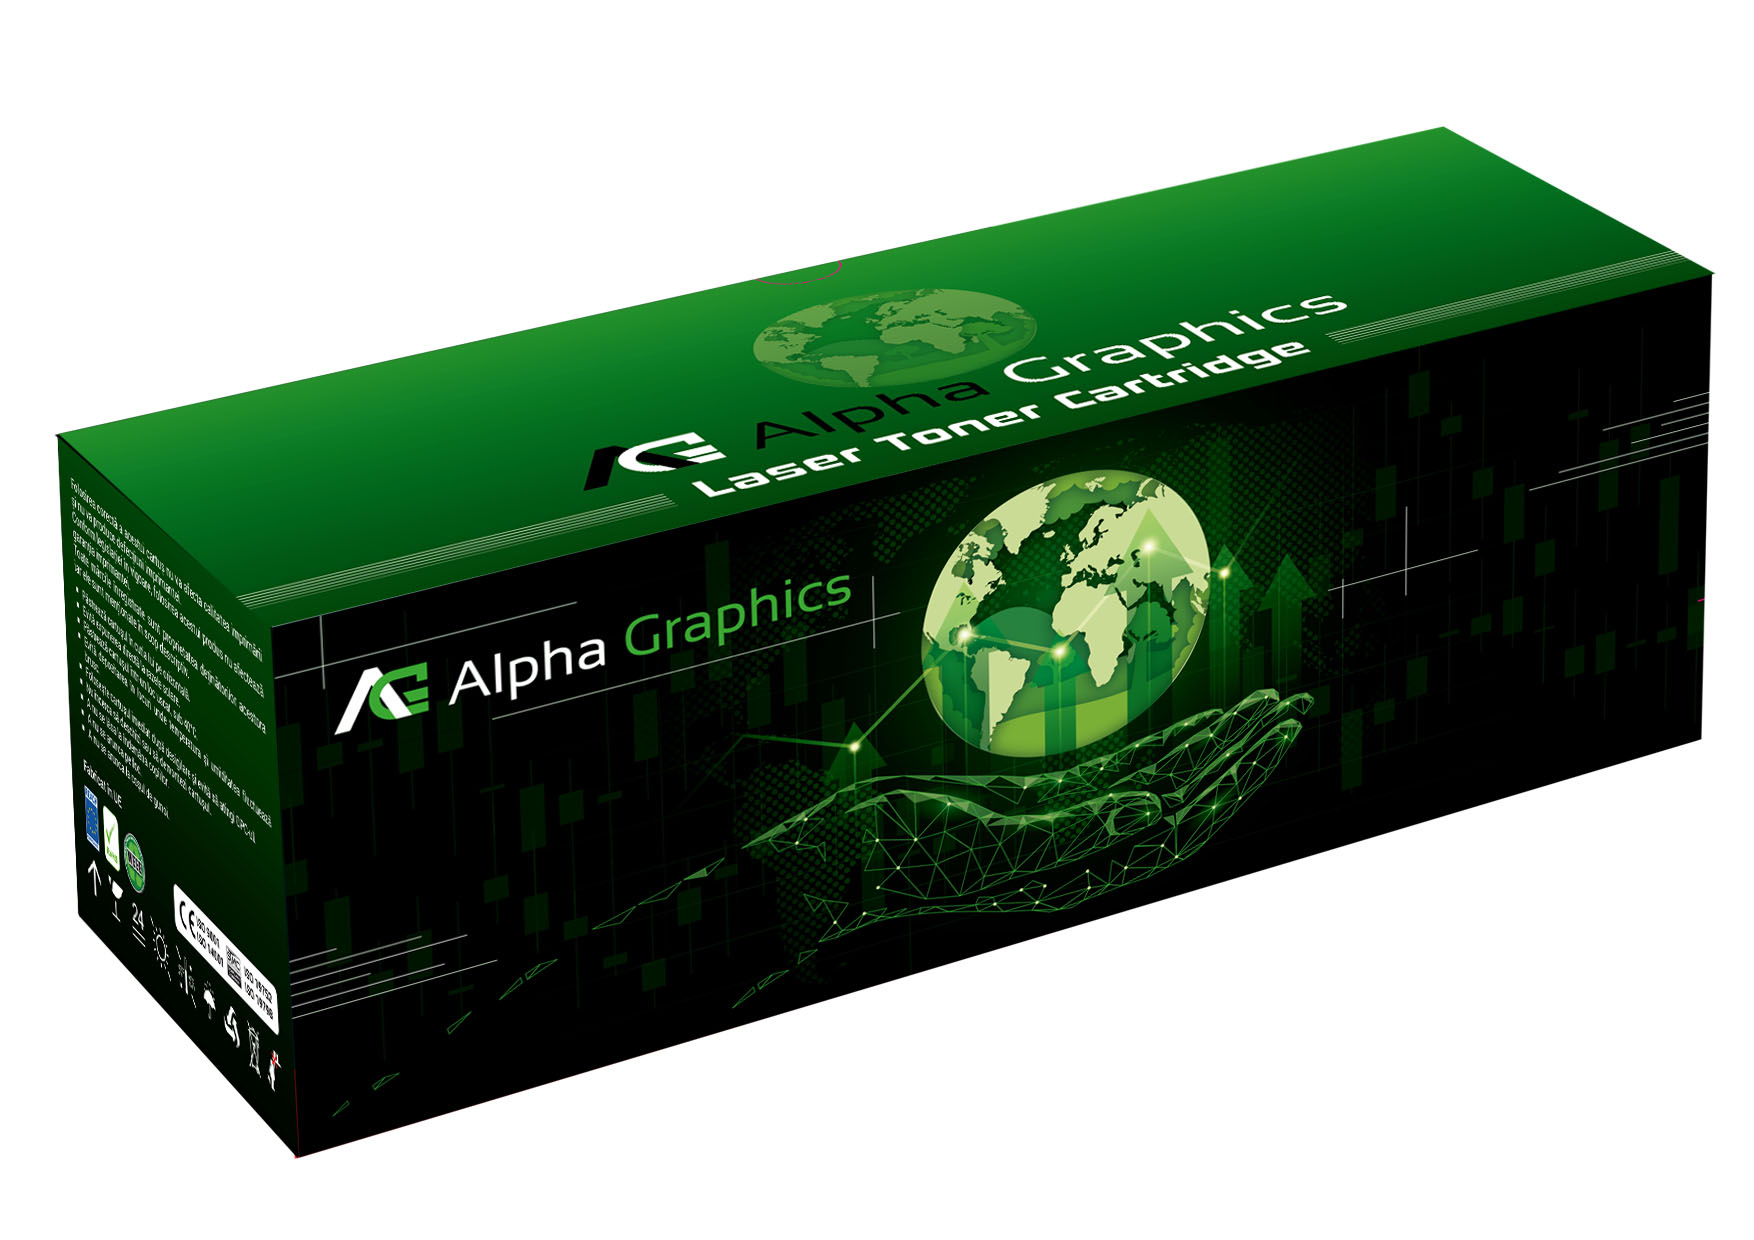 LEX C950/X950 C Alpha Graphics Laser